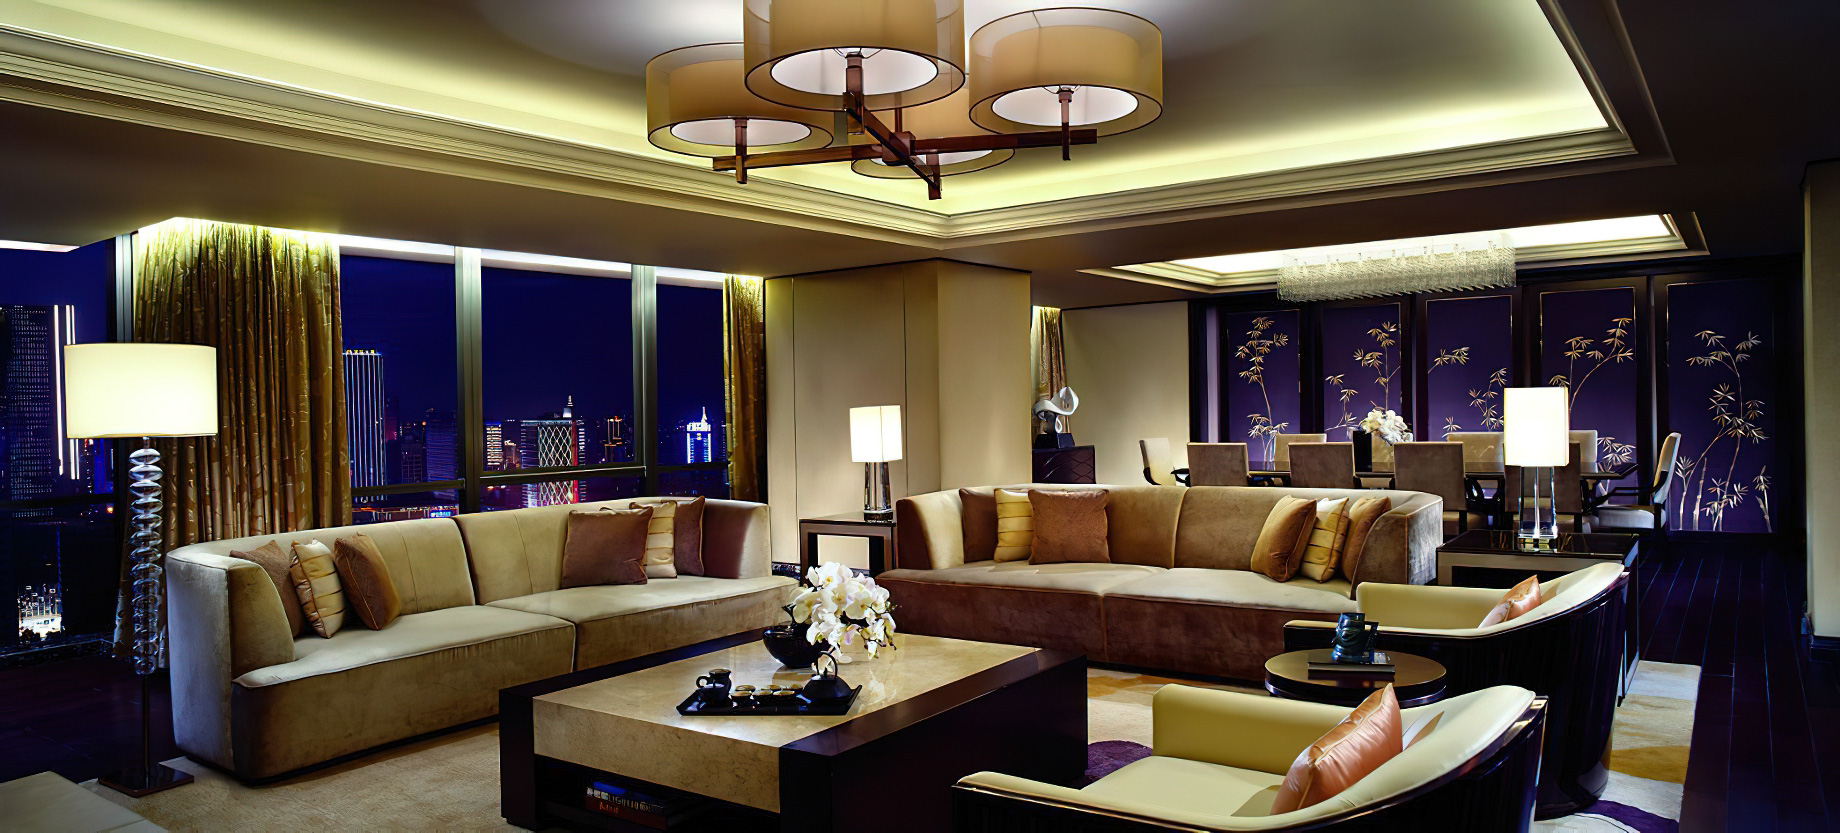 The Ritz-Carlton, Chengdu Hotel – Chengdu, Sichuan, China – Presidential Suite Living Area